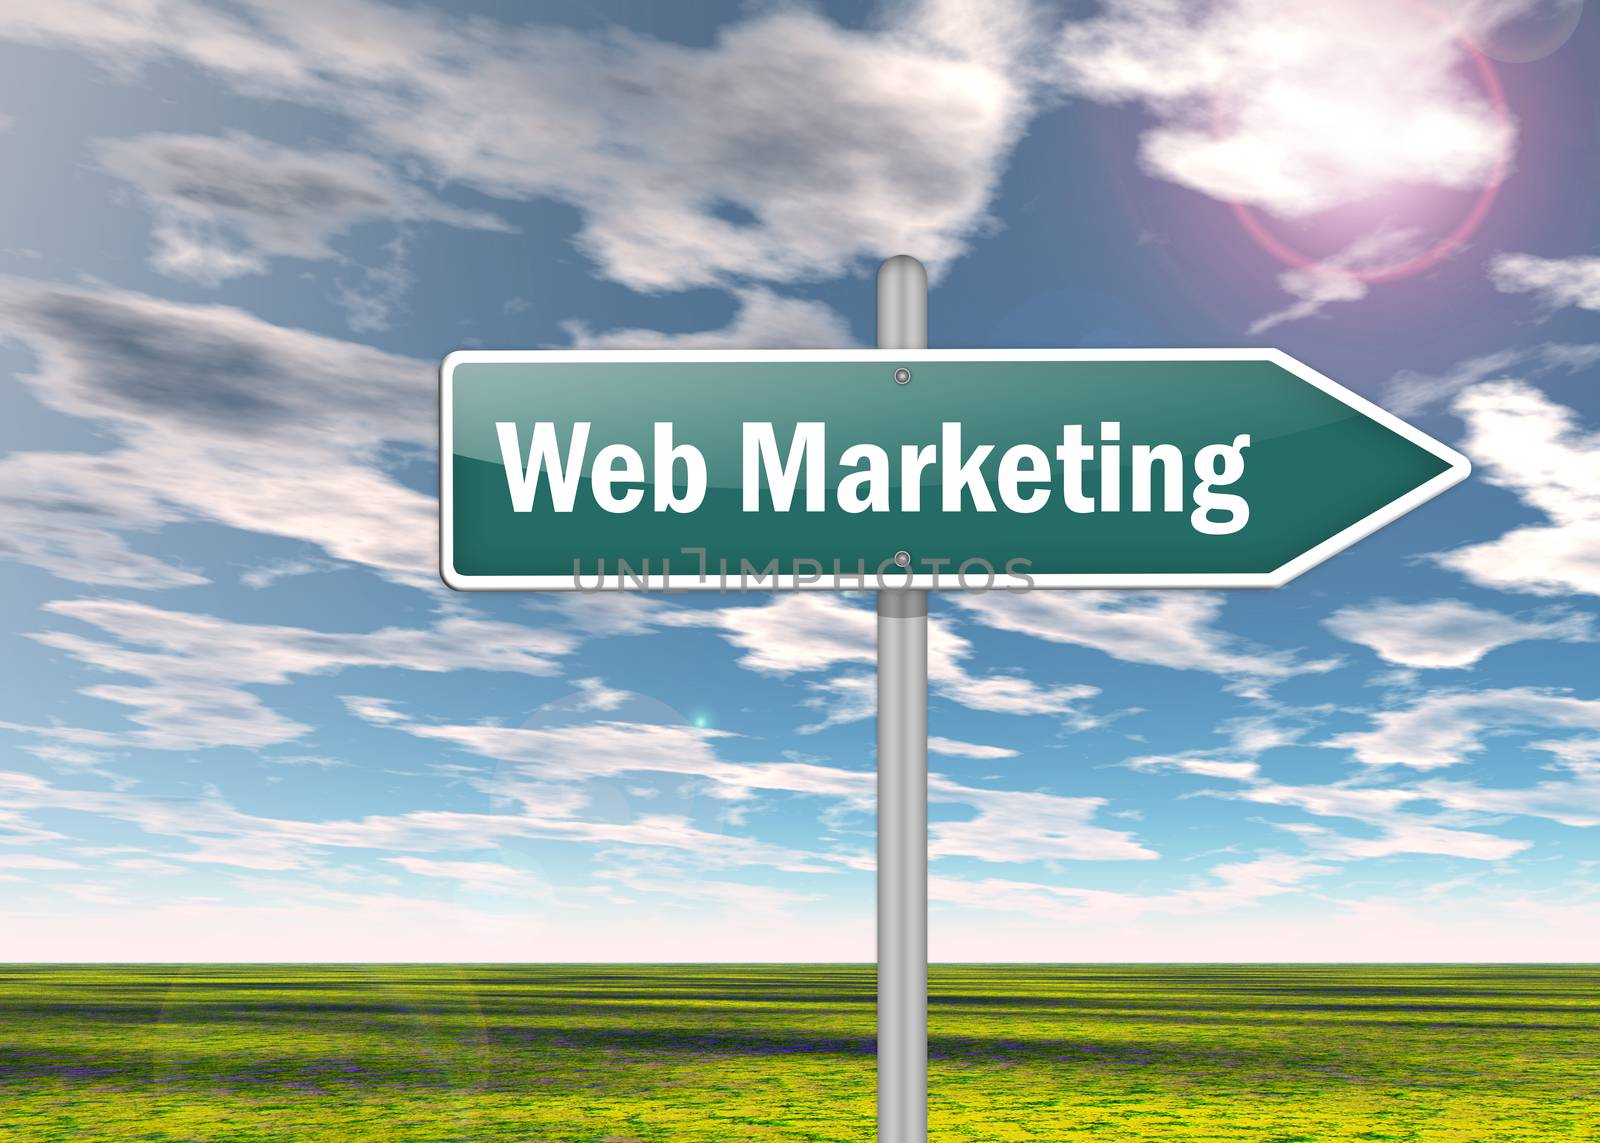 Signpost "Web Marketing" by mindscanner